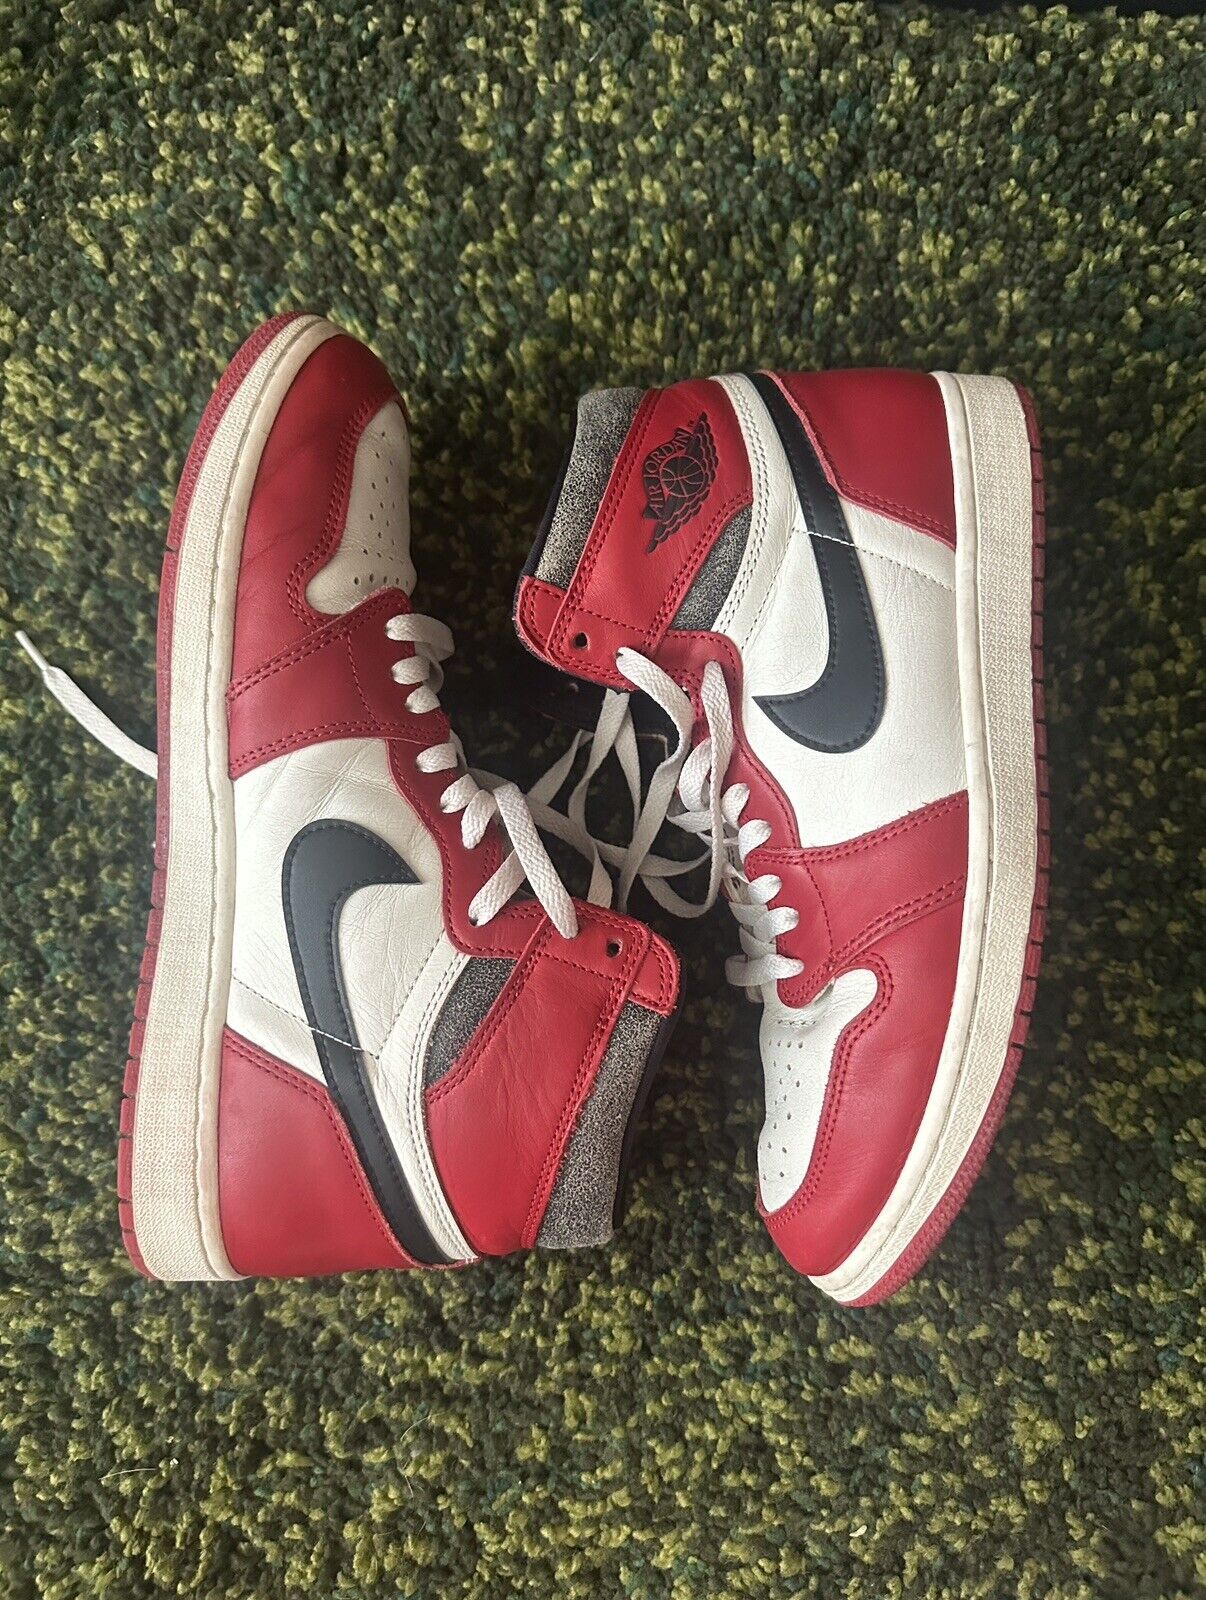 Red Nike Air Jordans